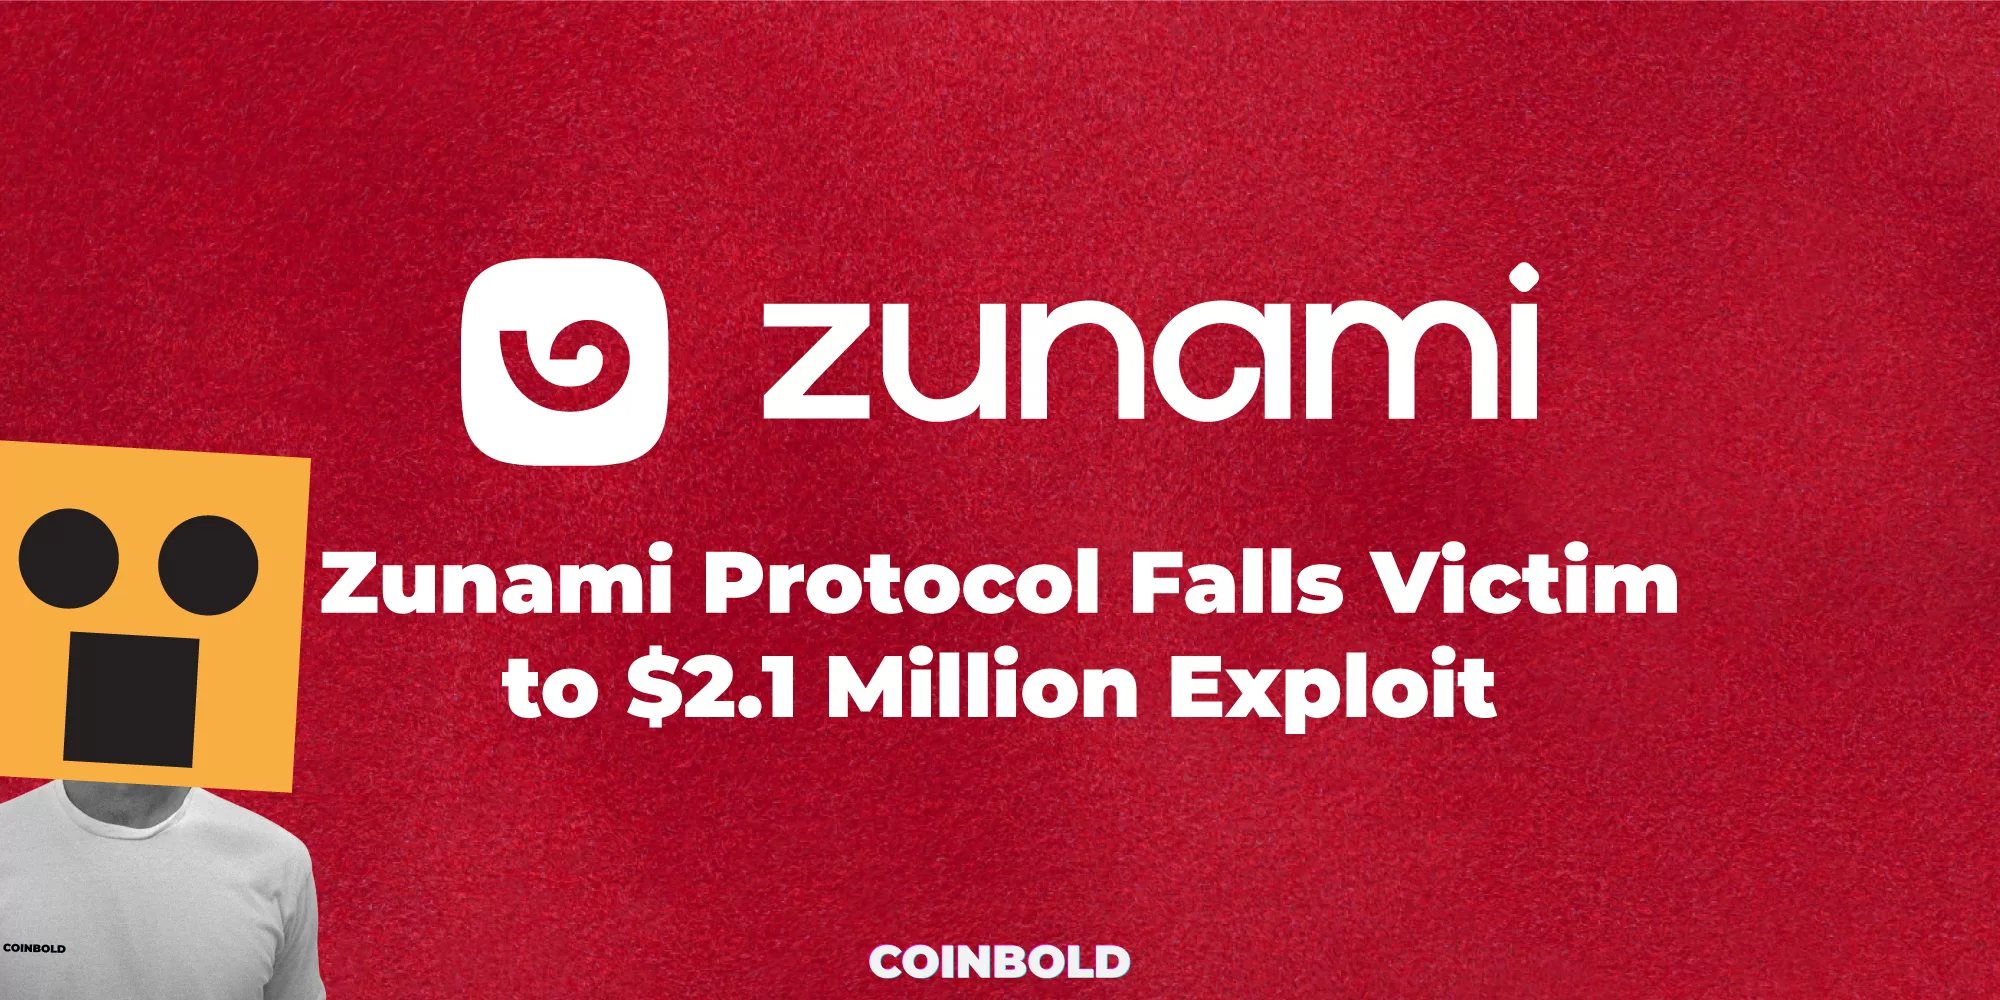 Zunami Protocol Falls Victim to $2.1 Million Exploit 2